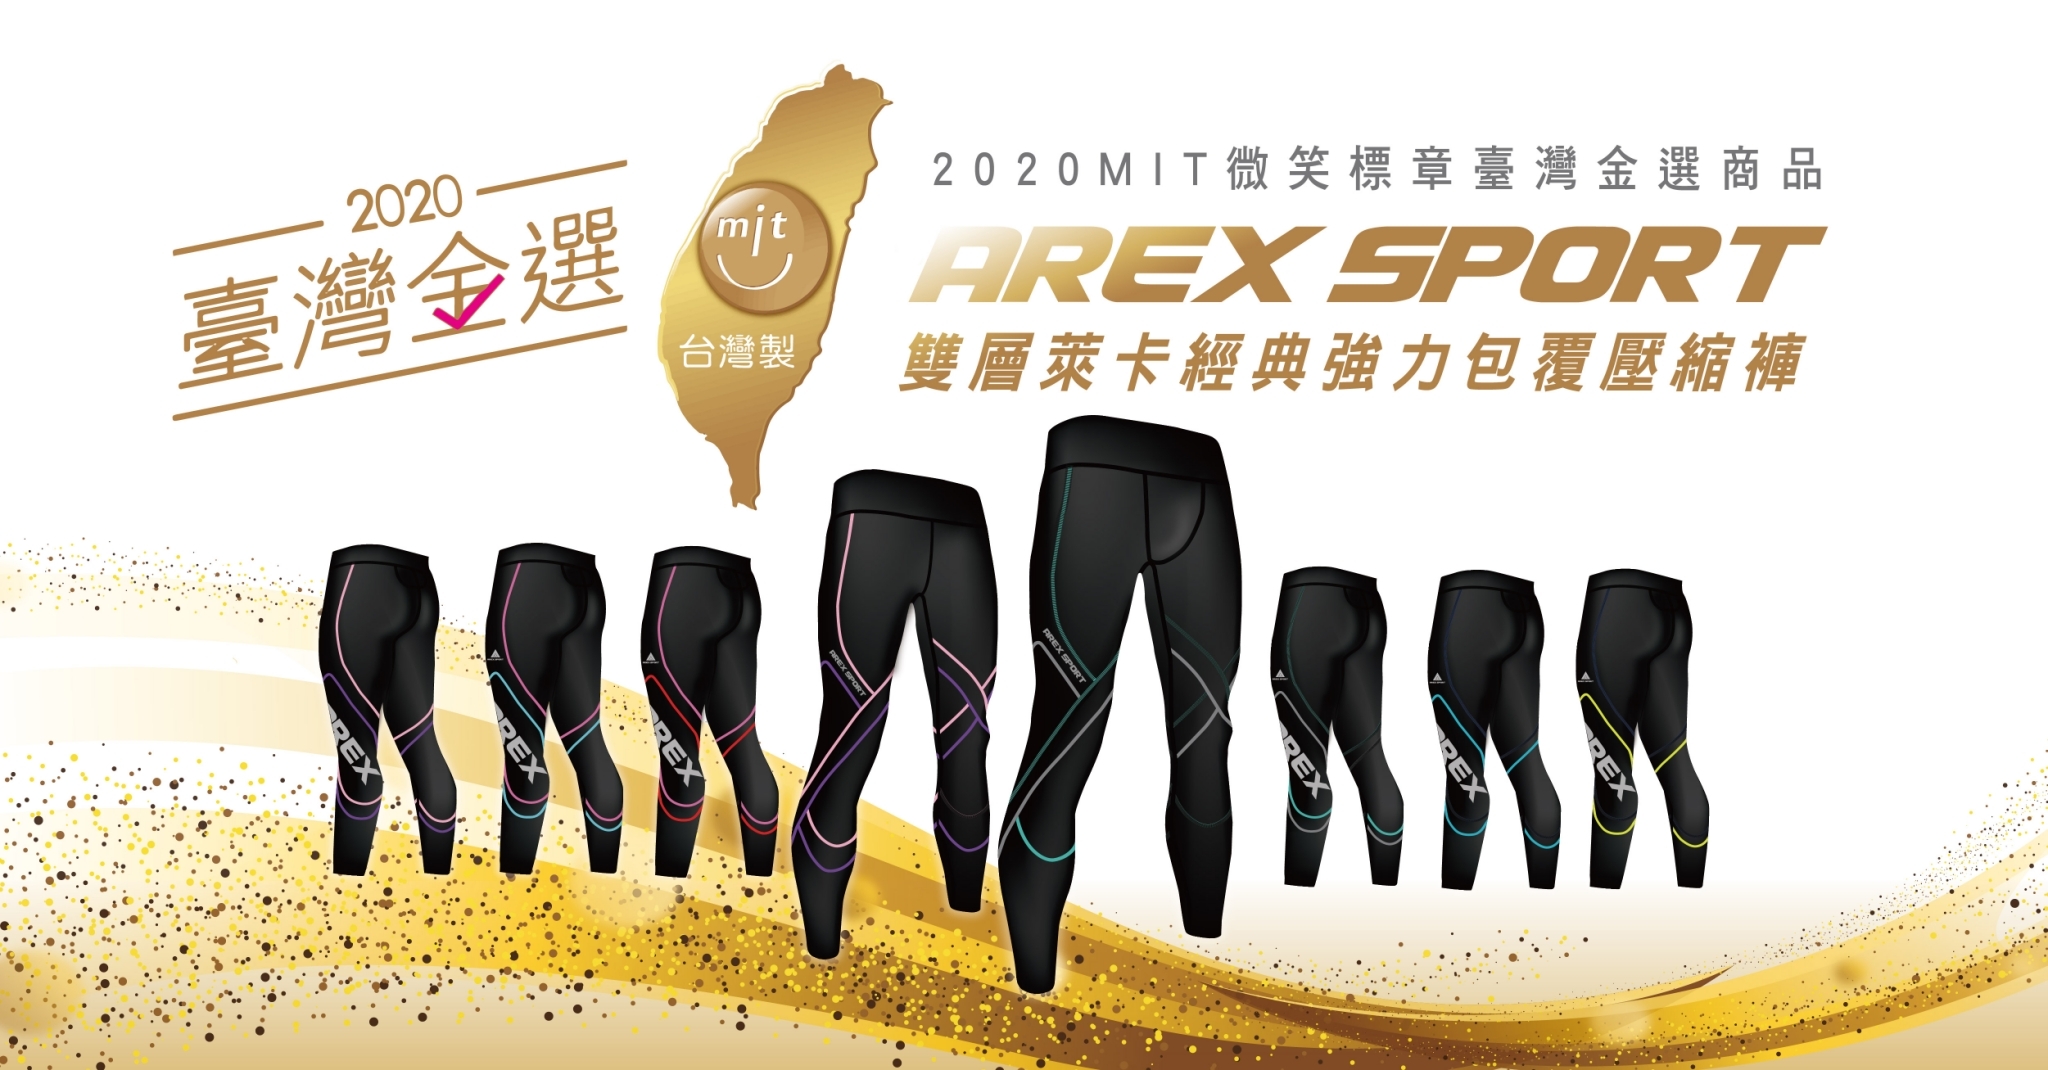 《AREX SPORT》壓縮褲榮獲2020 MIT微笑標章臺灣金選商品肯定。
